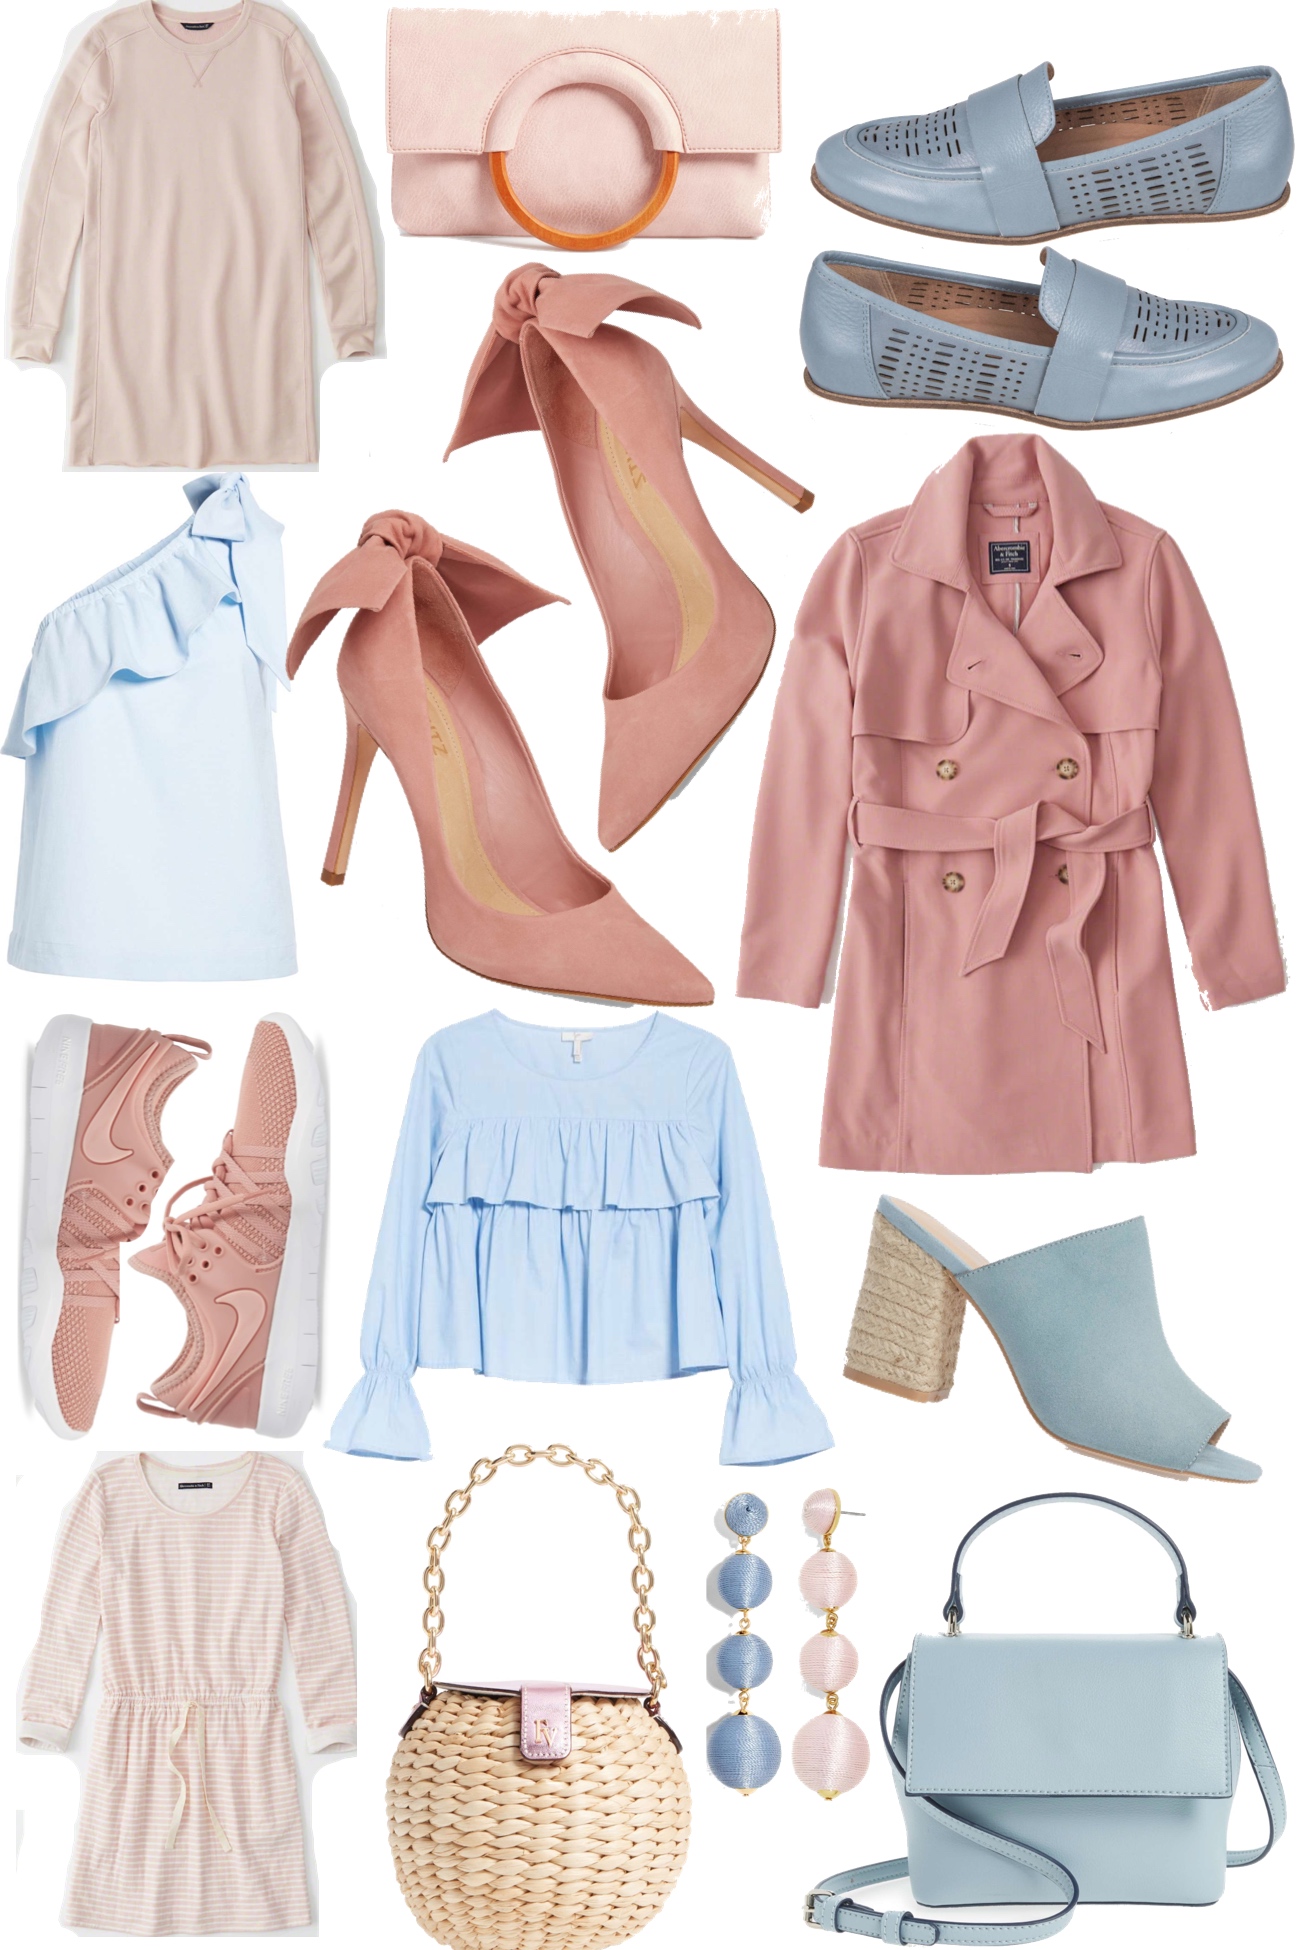 Spring '18 Color Report: Powder Blue & Blush Pink - SHOP DANDY | A ...